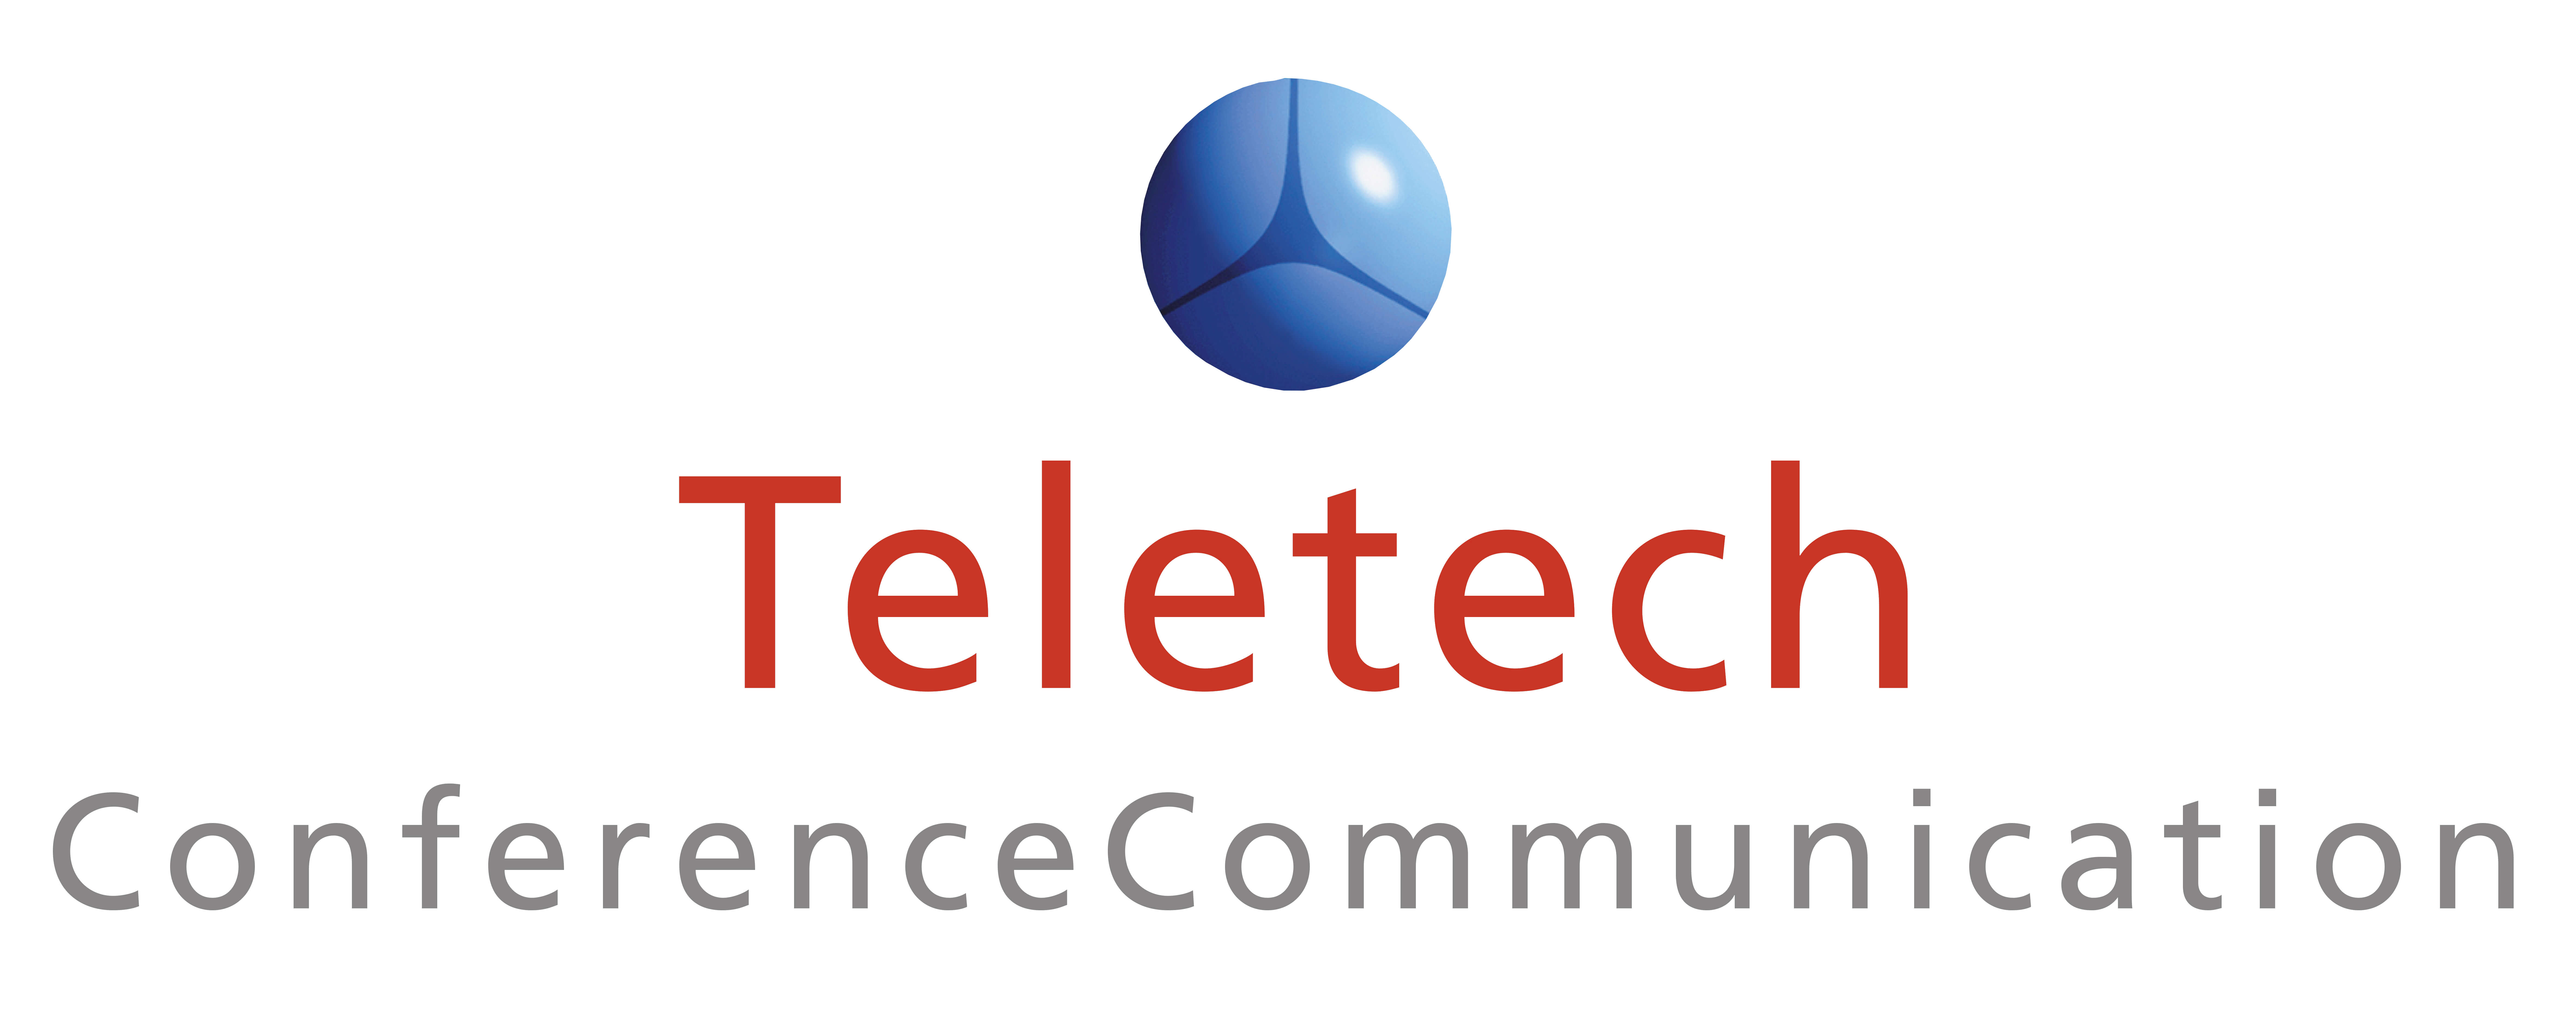 TeleTech Logo - Contact Teletech's employees here.